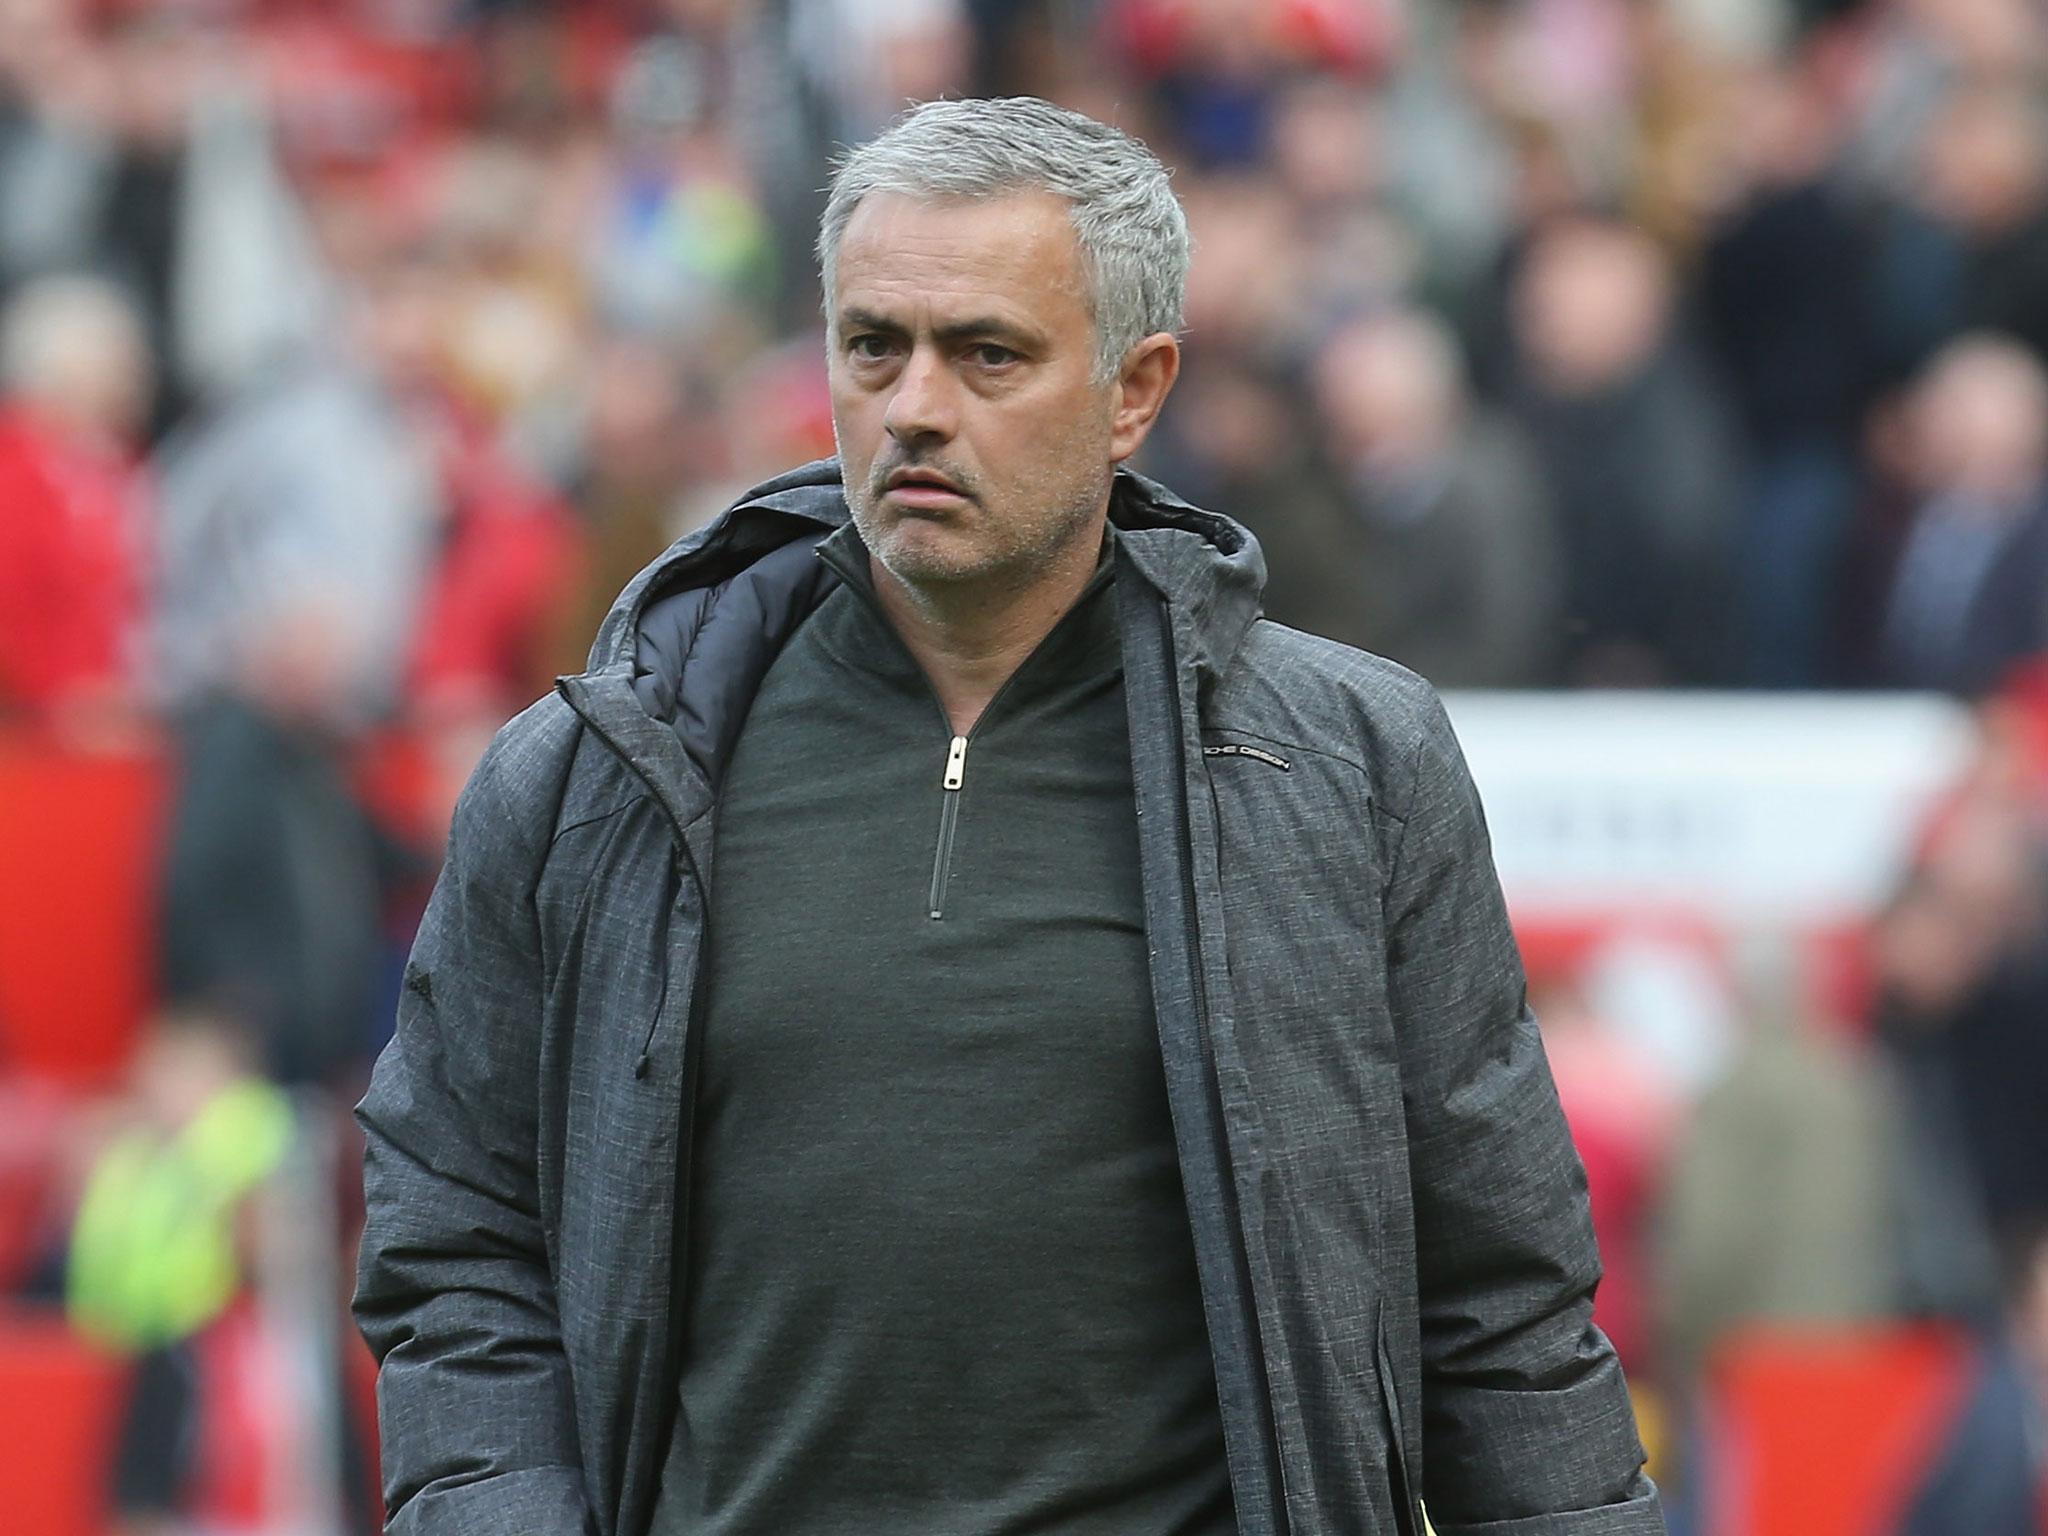 Jose Mourinho has once again bemoaned Manchester United's fixture pile-up